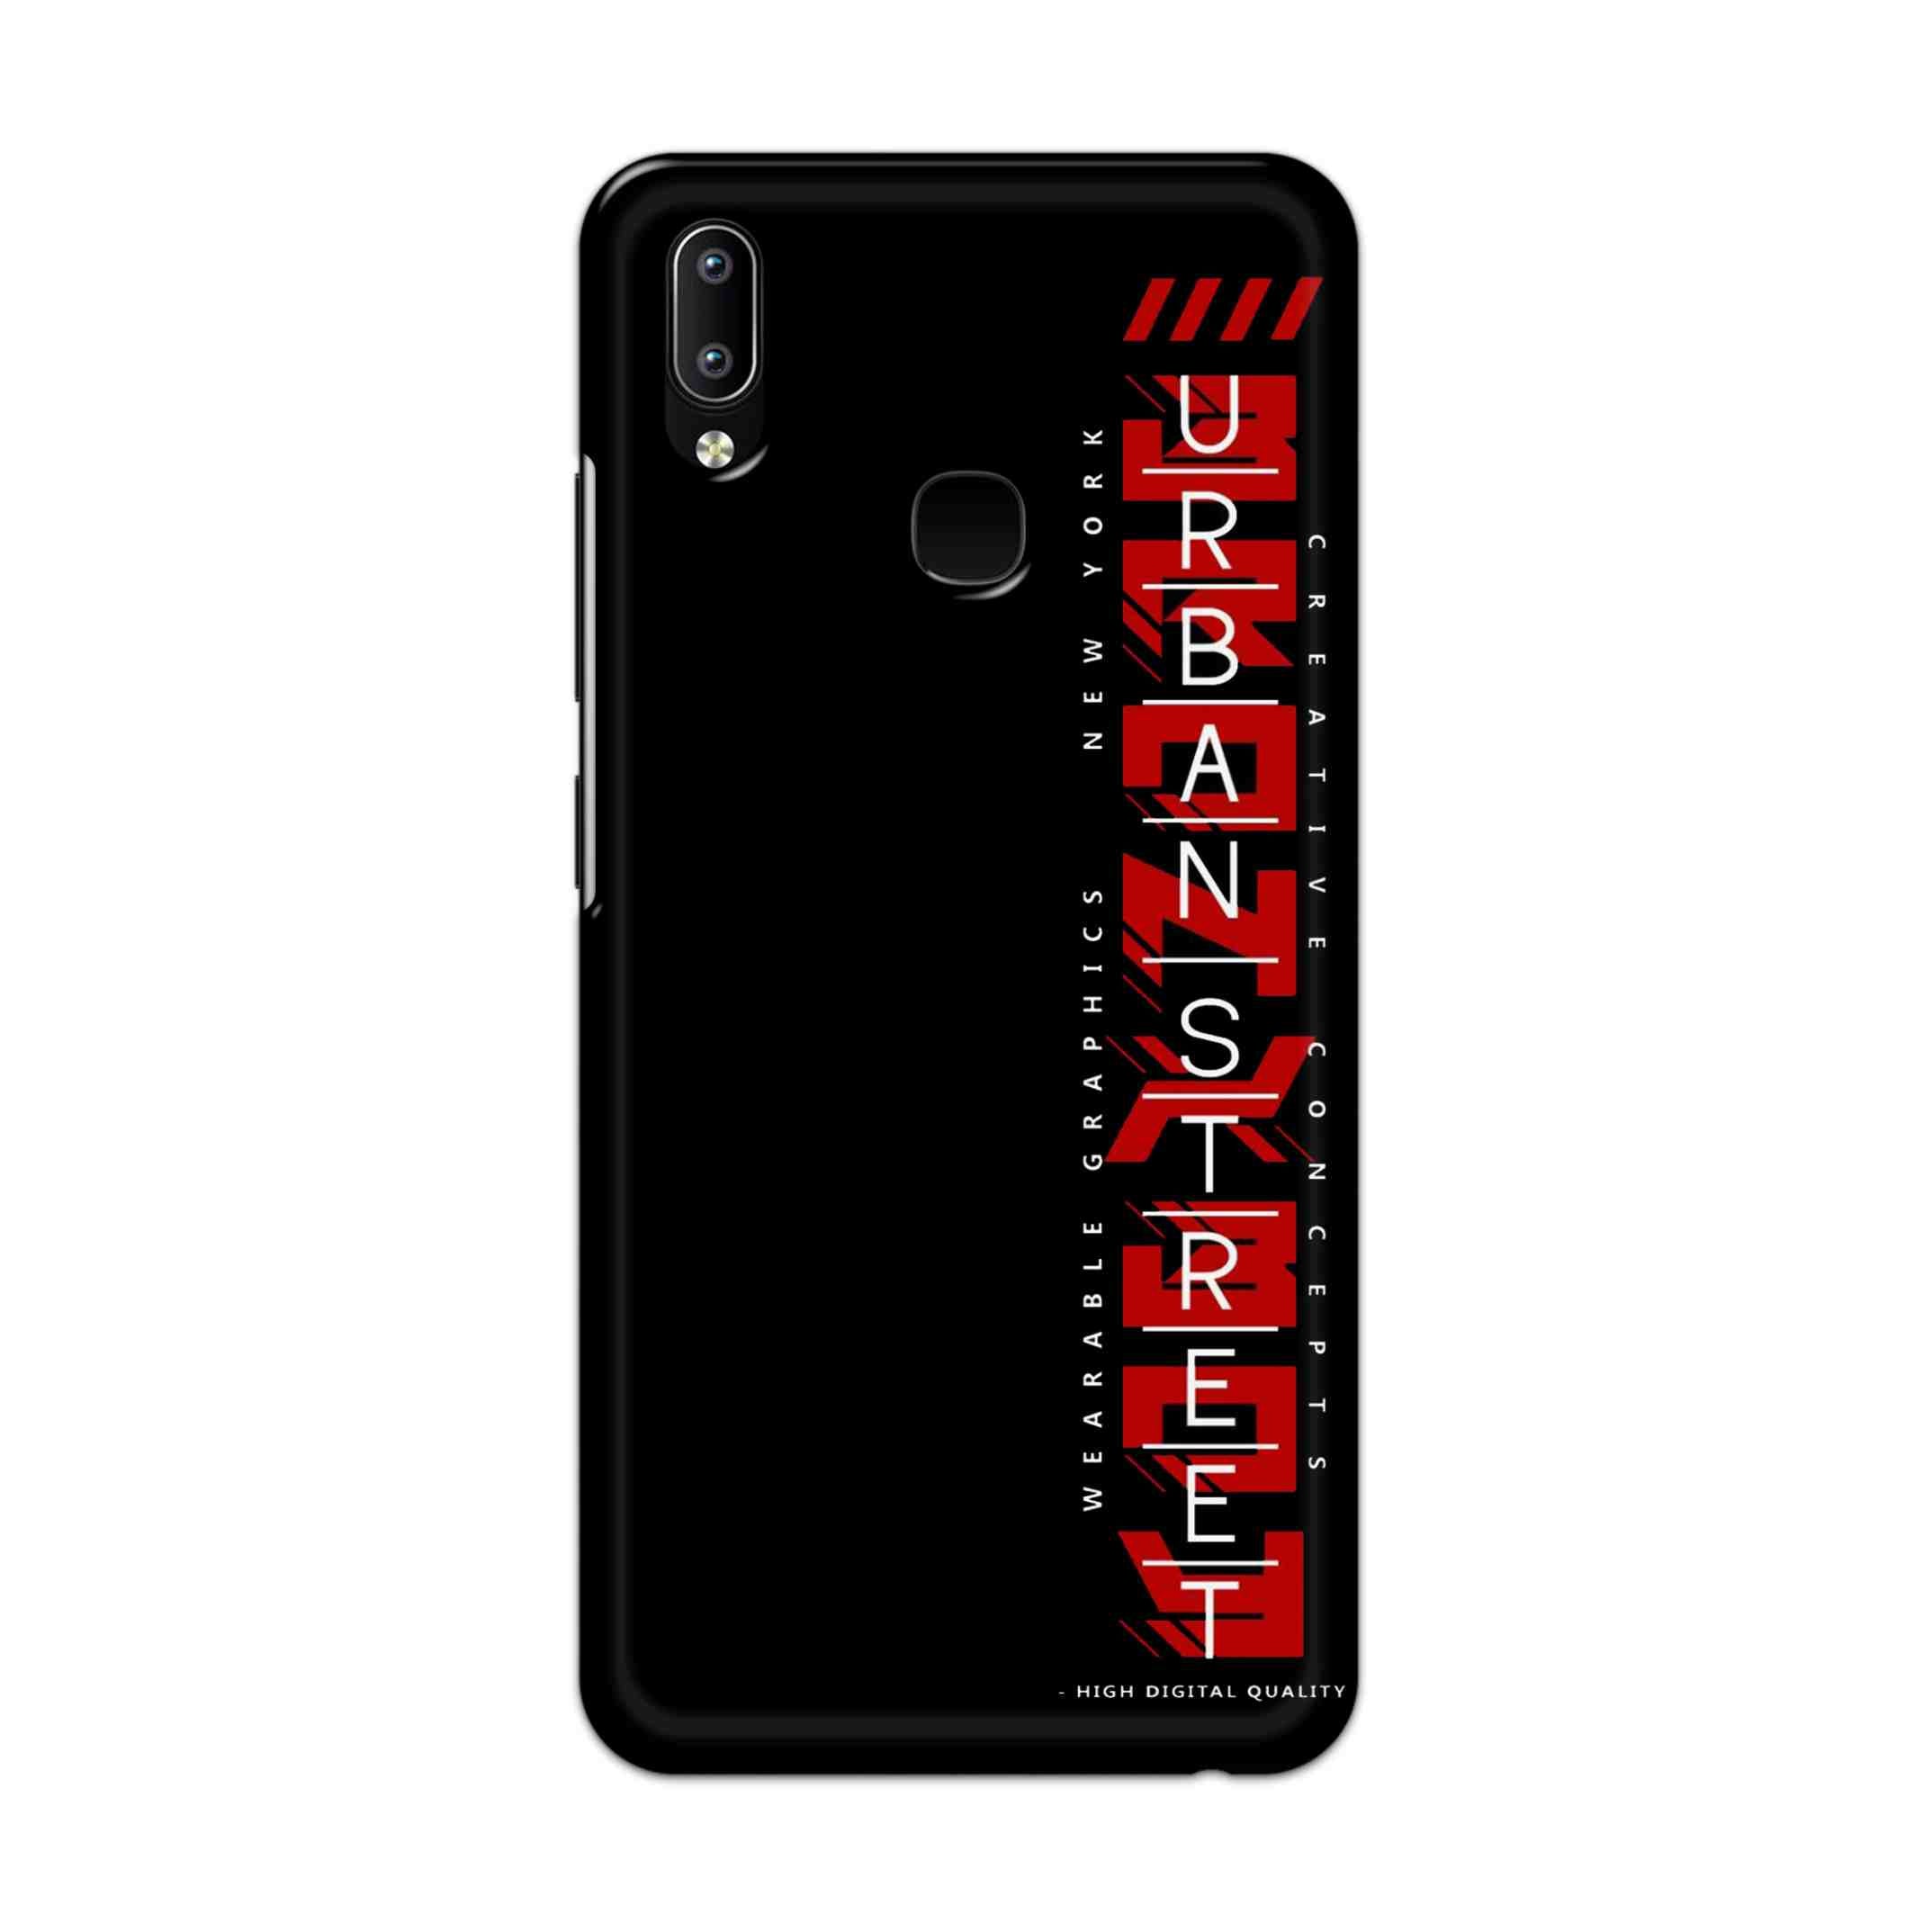 Buy Urban Street Hard Back Mobile Phone Case Cover For Vivo Y95 / Y93 / Y91 Online